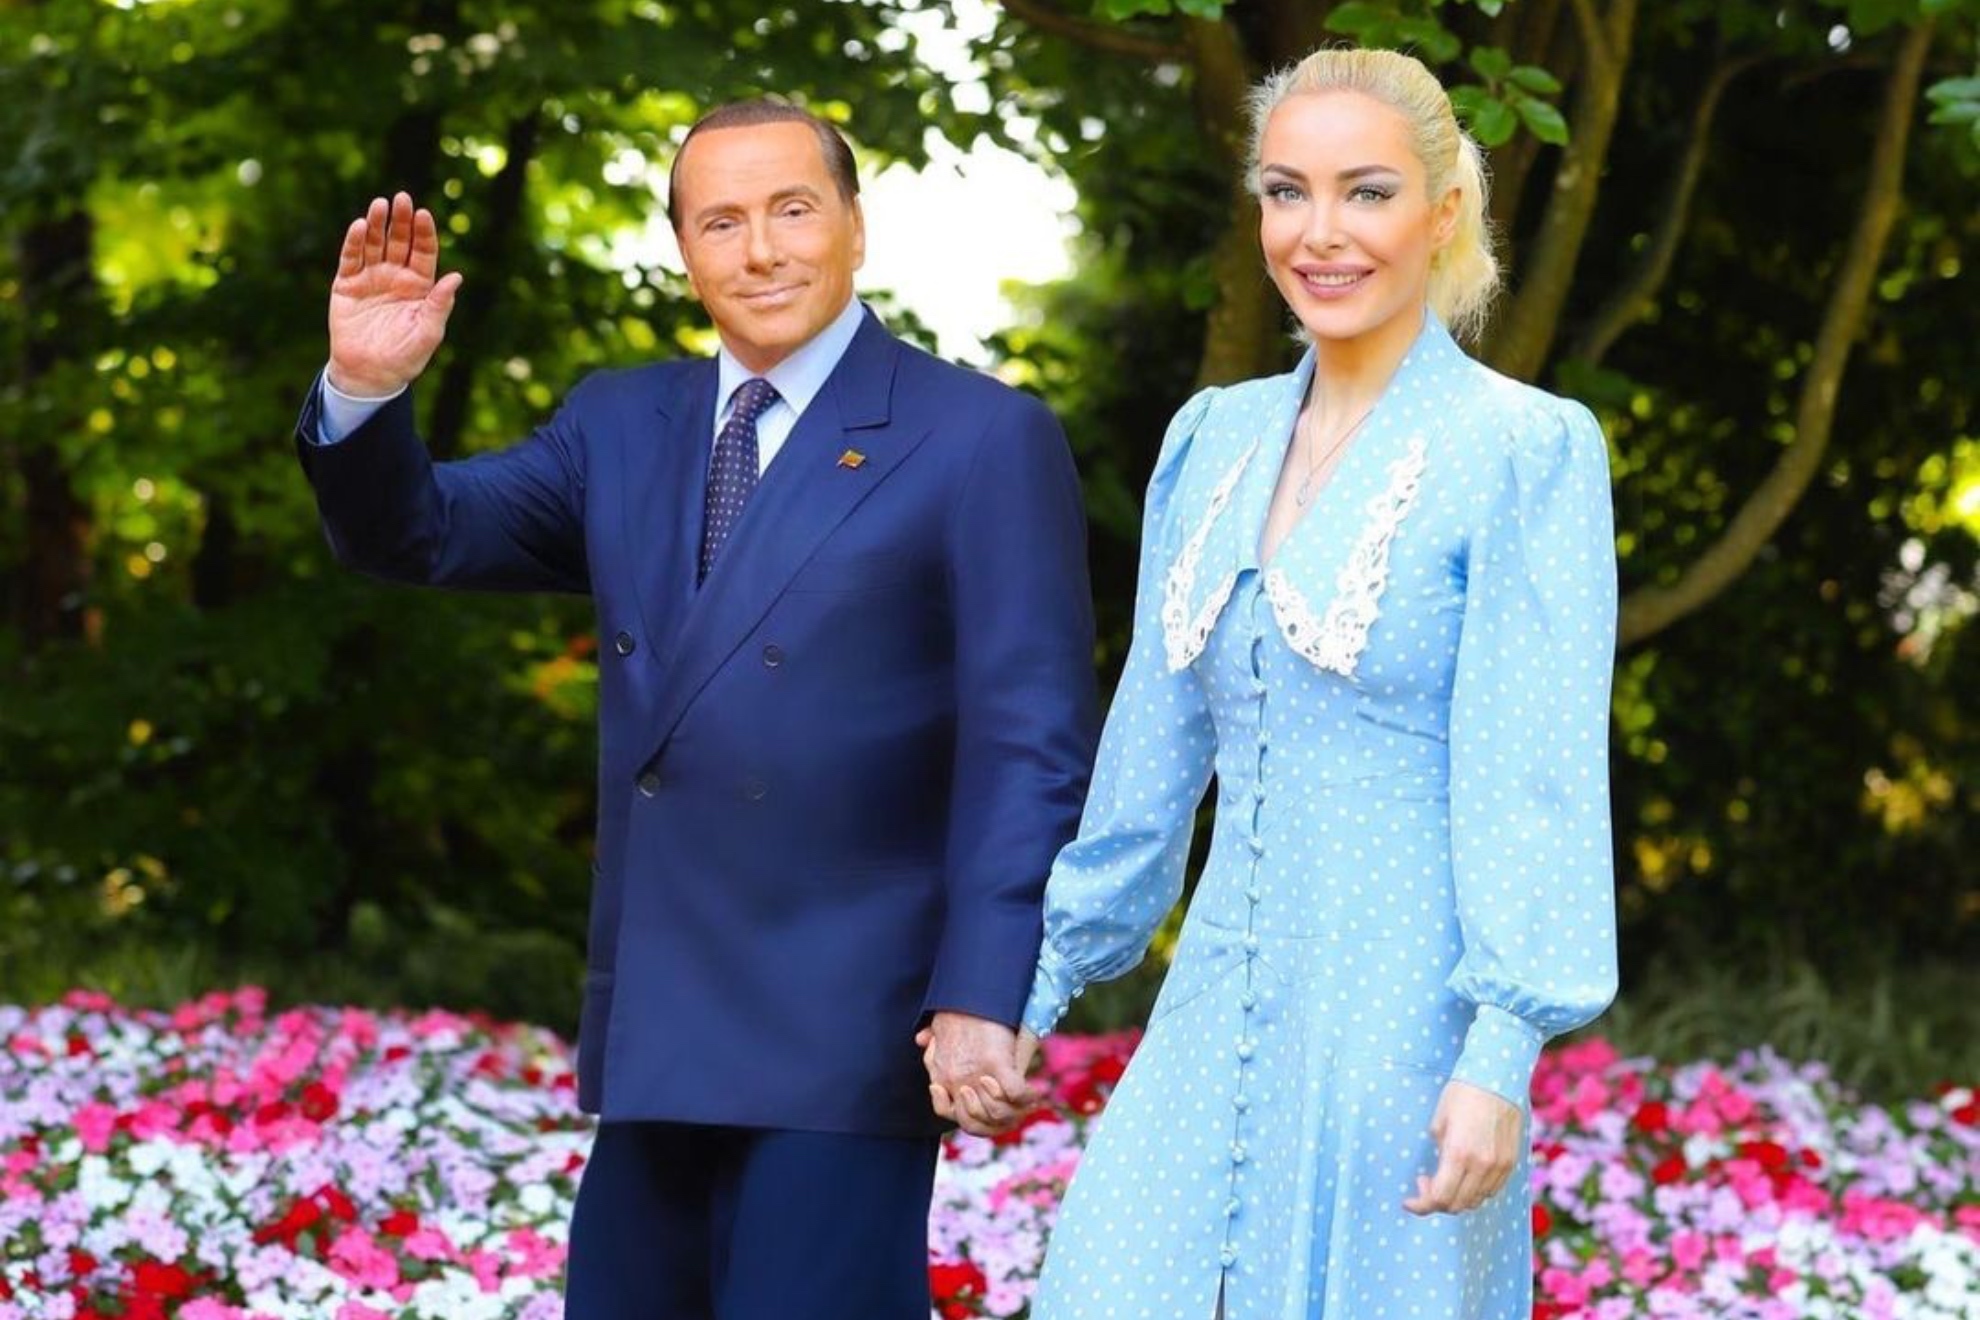 Who is Marta Fascina who will inherit Italian politician Berlusconi’s wealth?